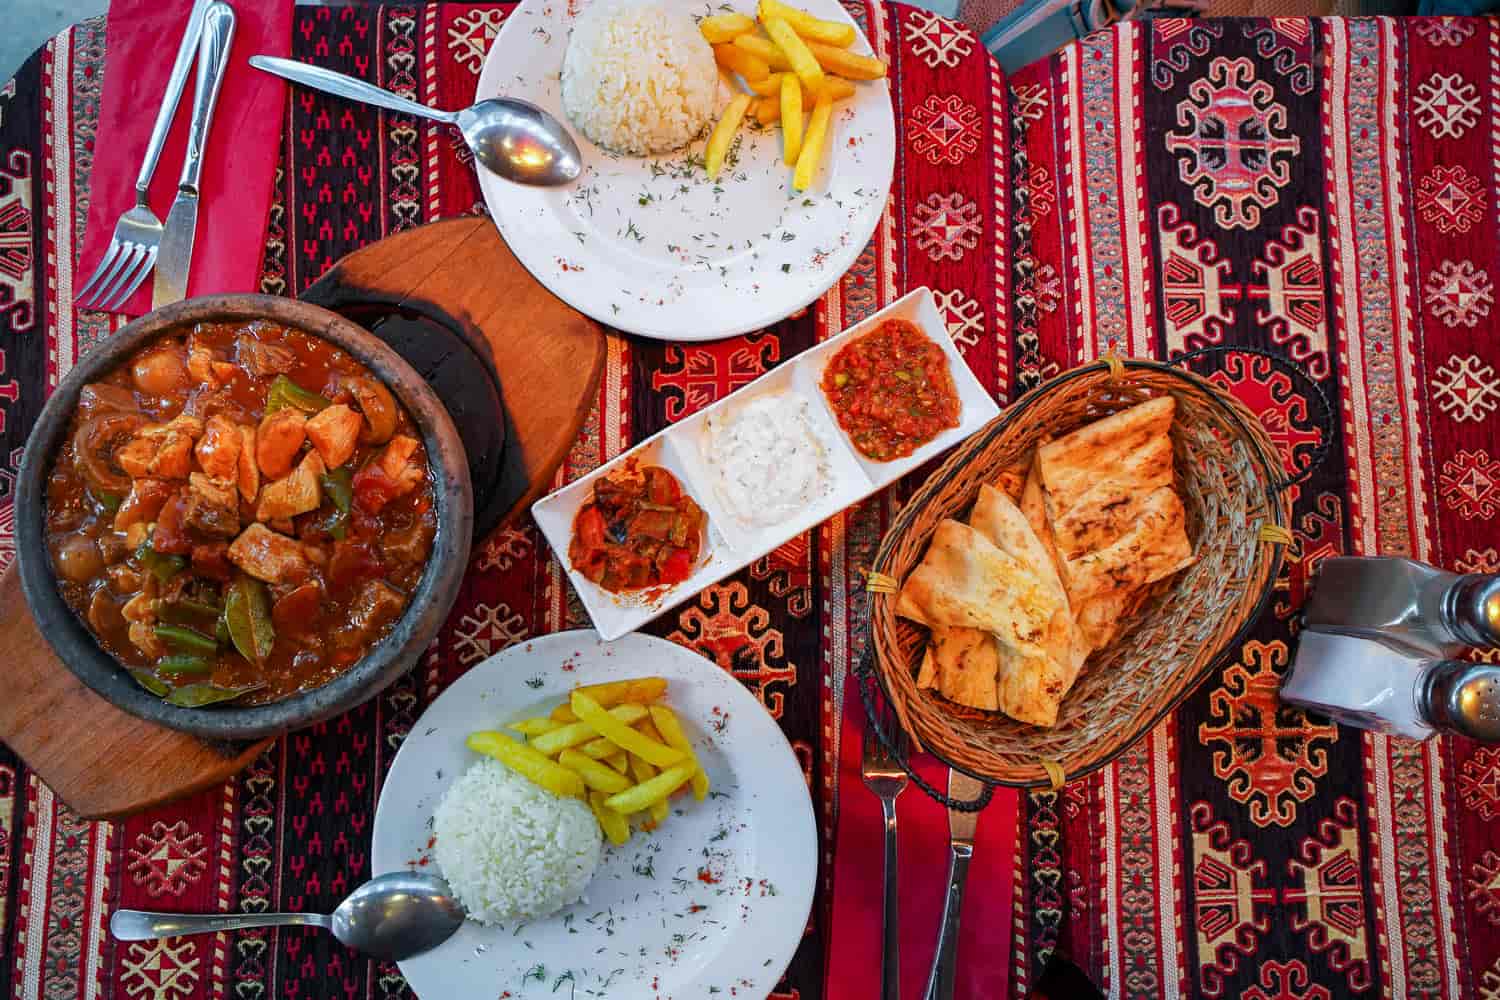 Turkish testi kebab on table with sides of rice, fries, pita bread, dips